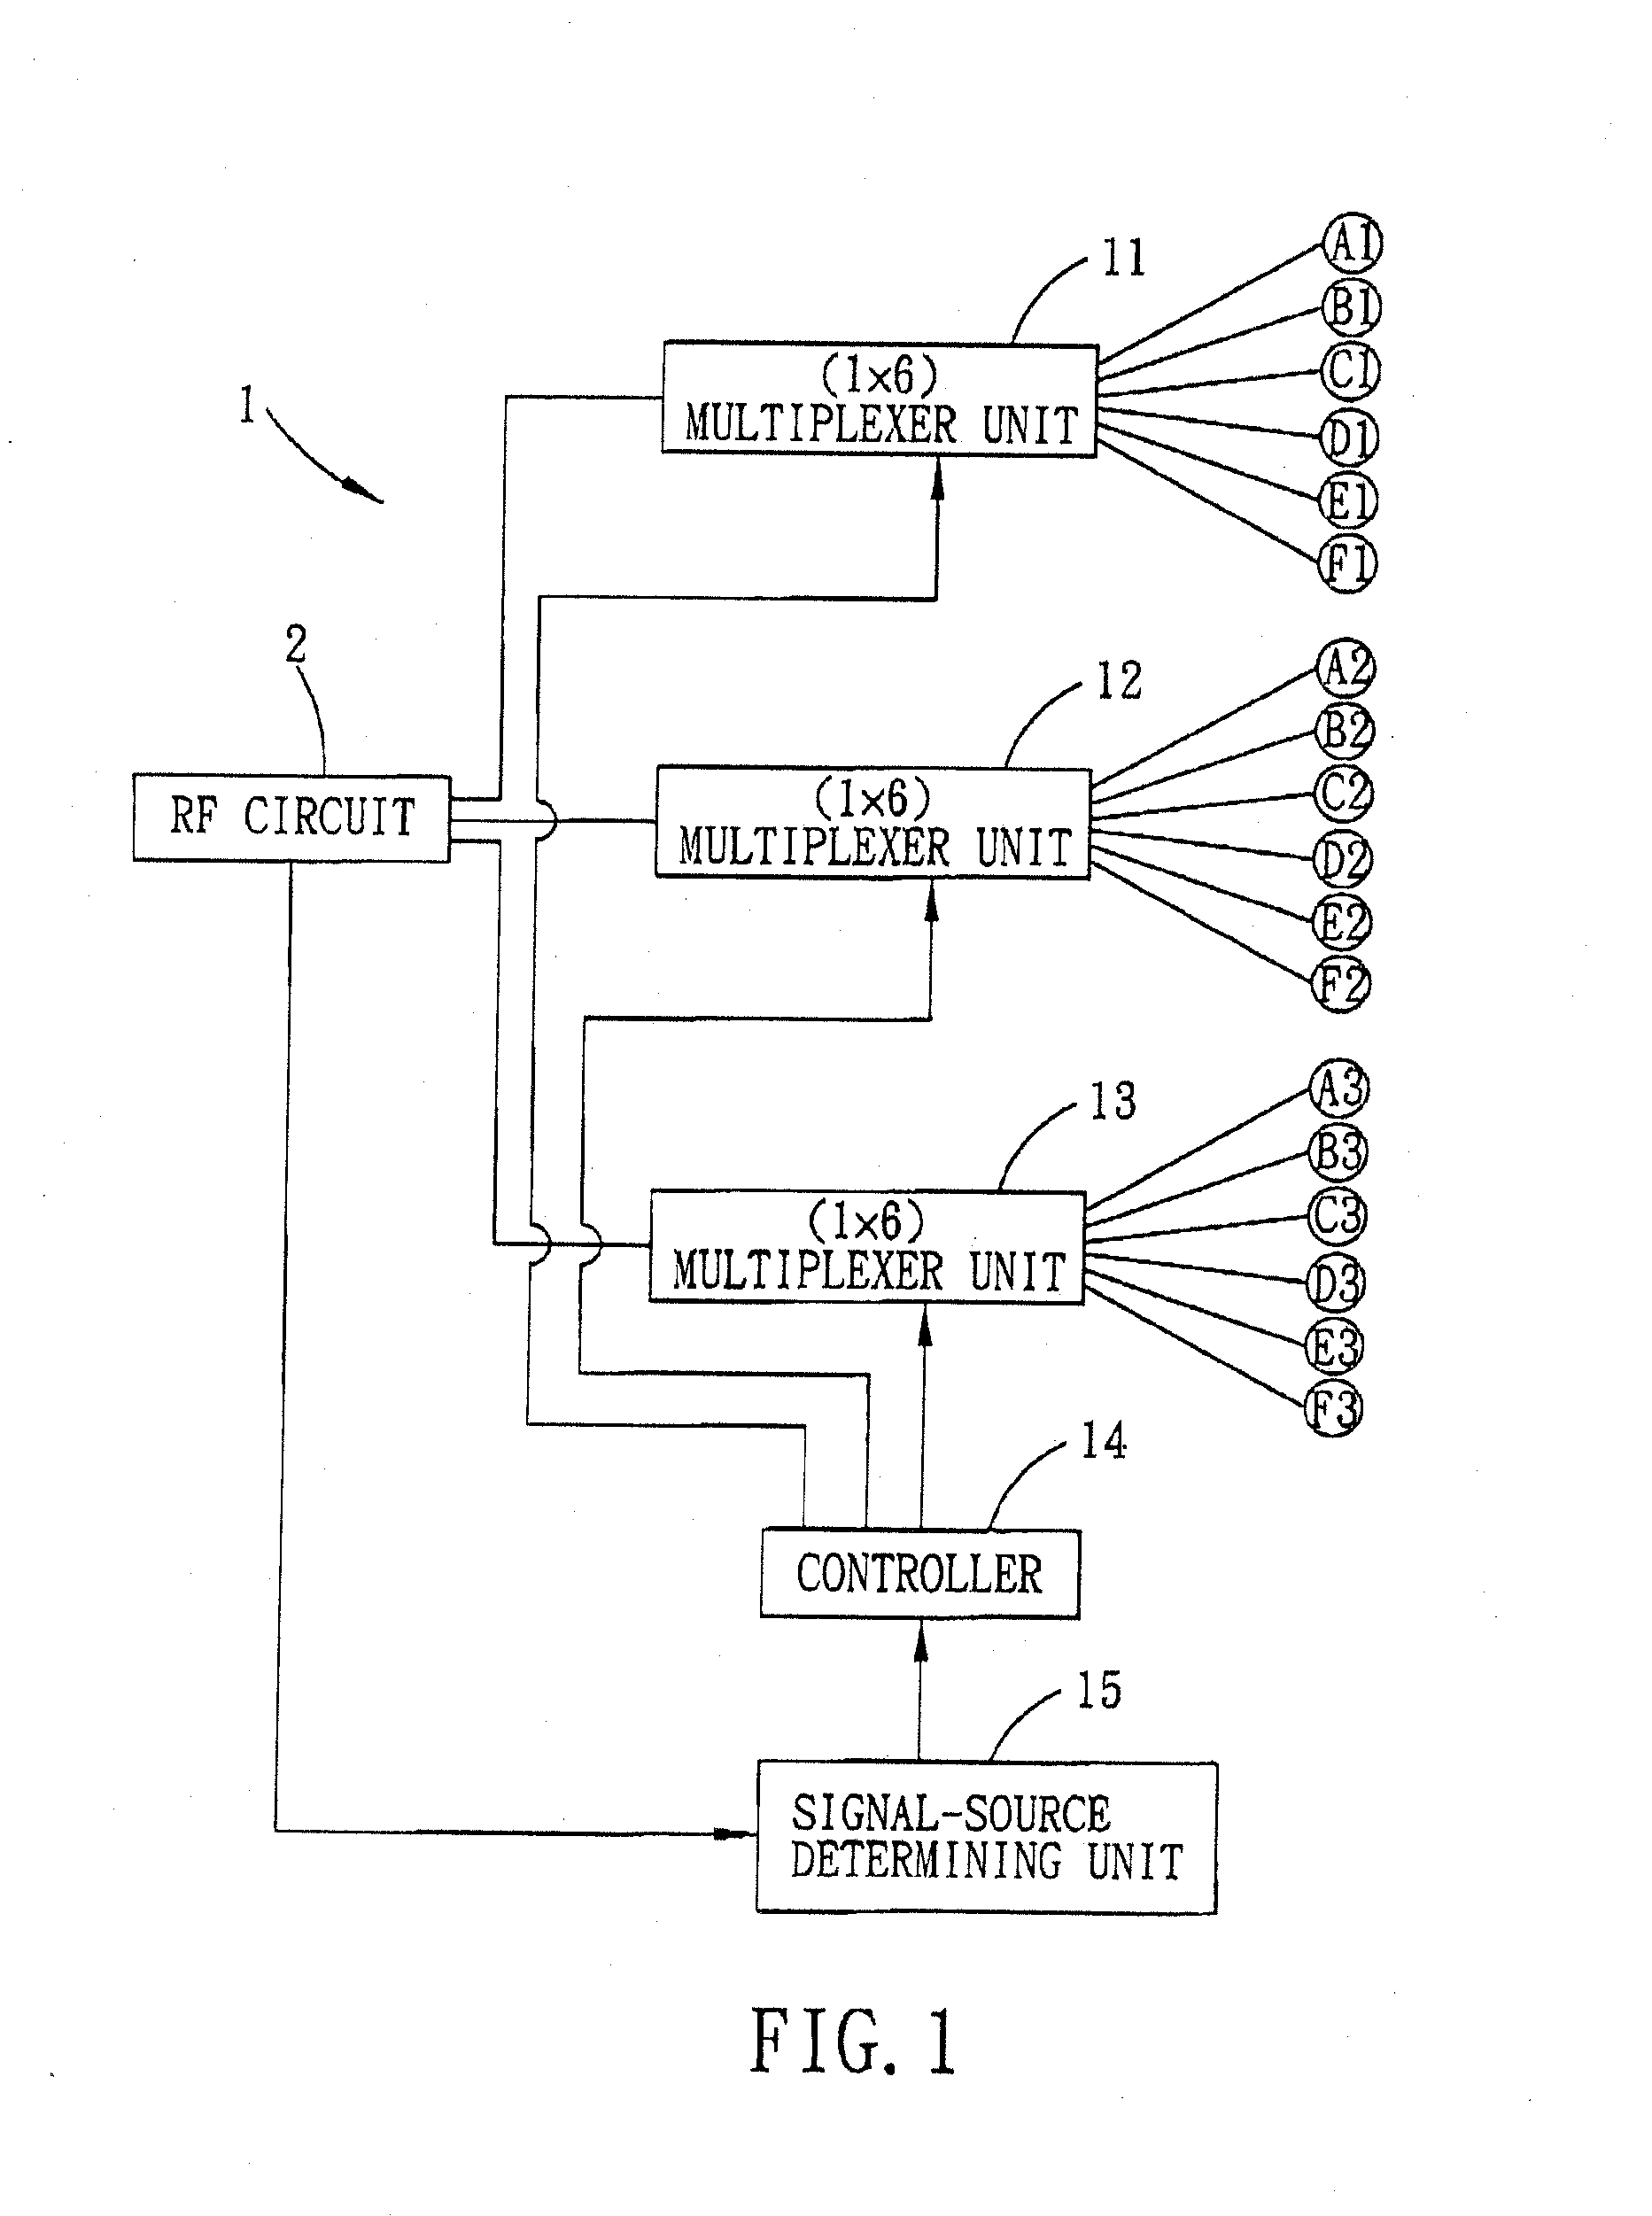 Multiple-input-multiple-output antenna device